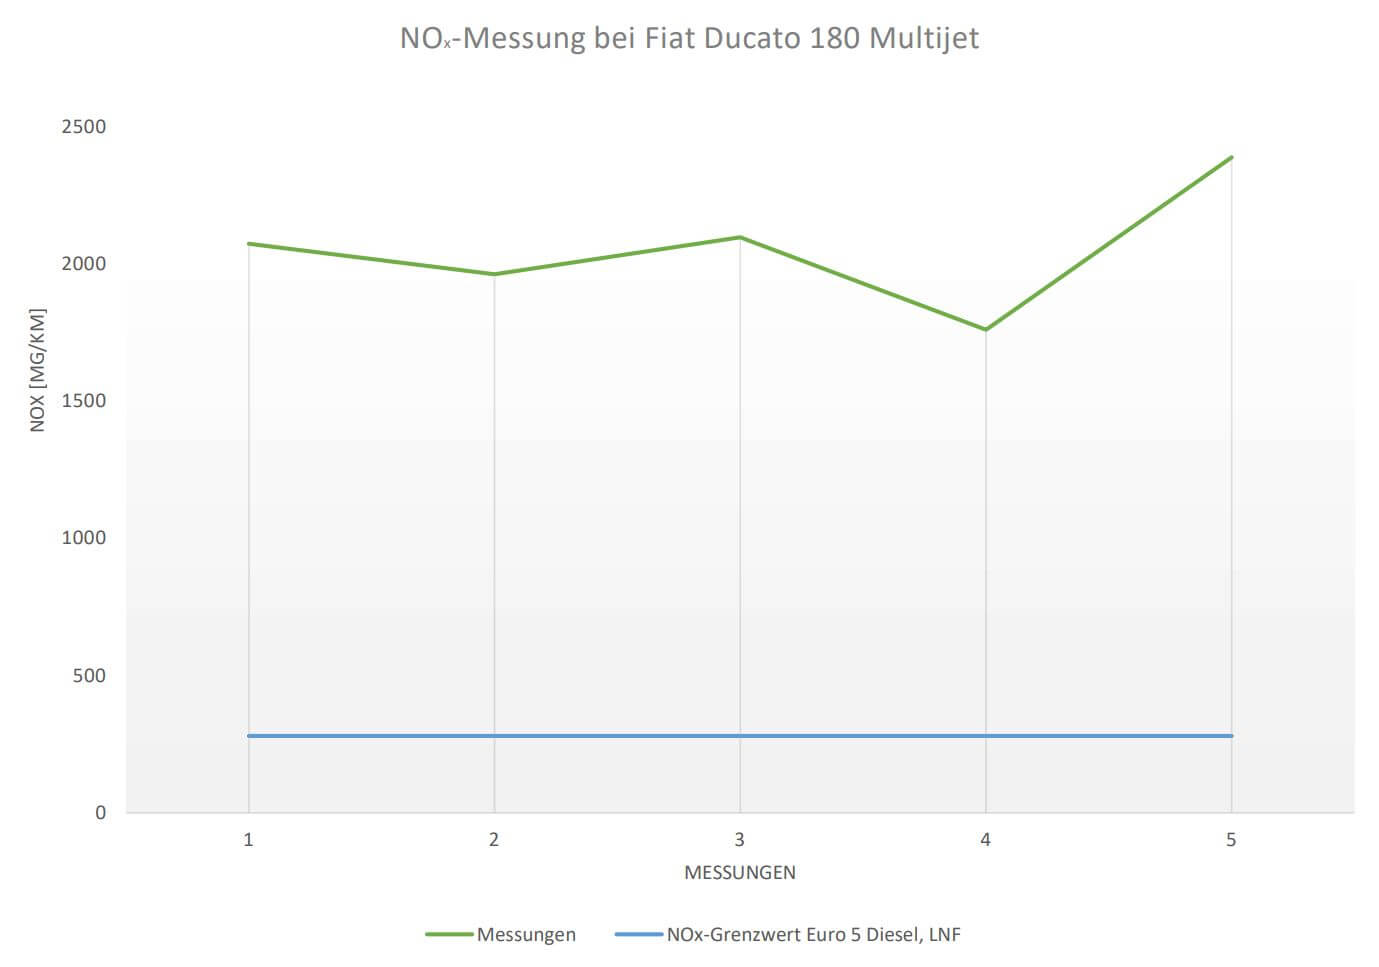 DUH again publishes new measurement results Fiat Ducato 180 Multijet emissions scandal